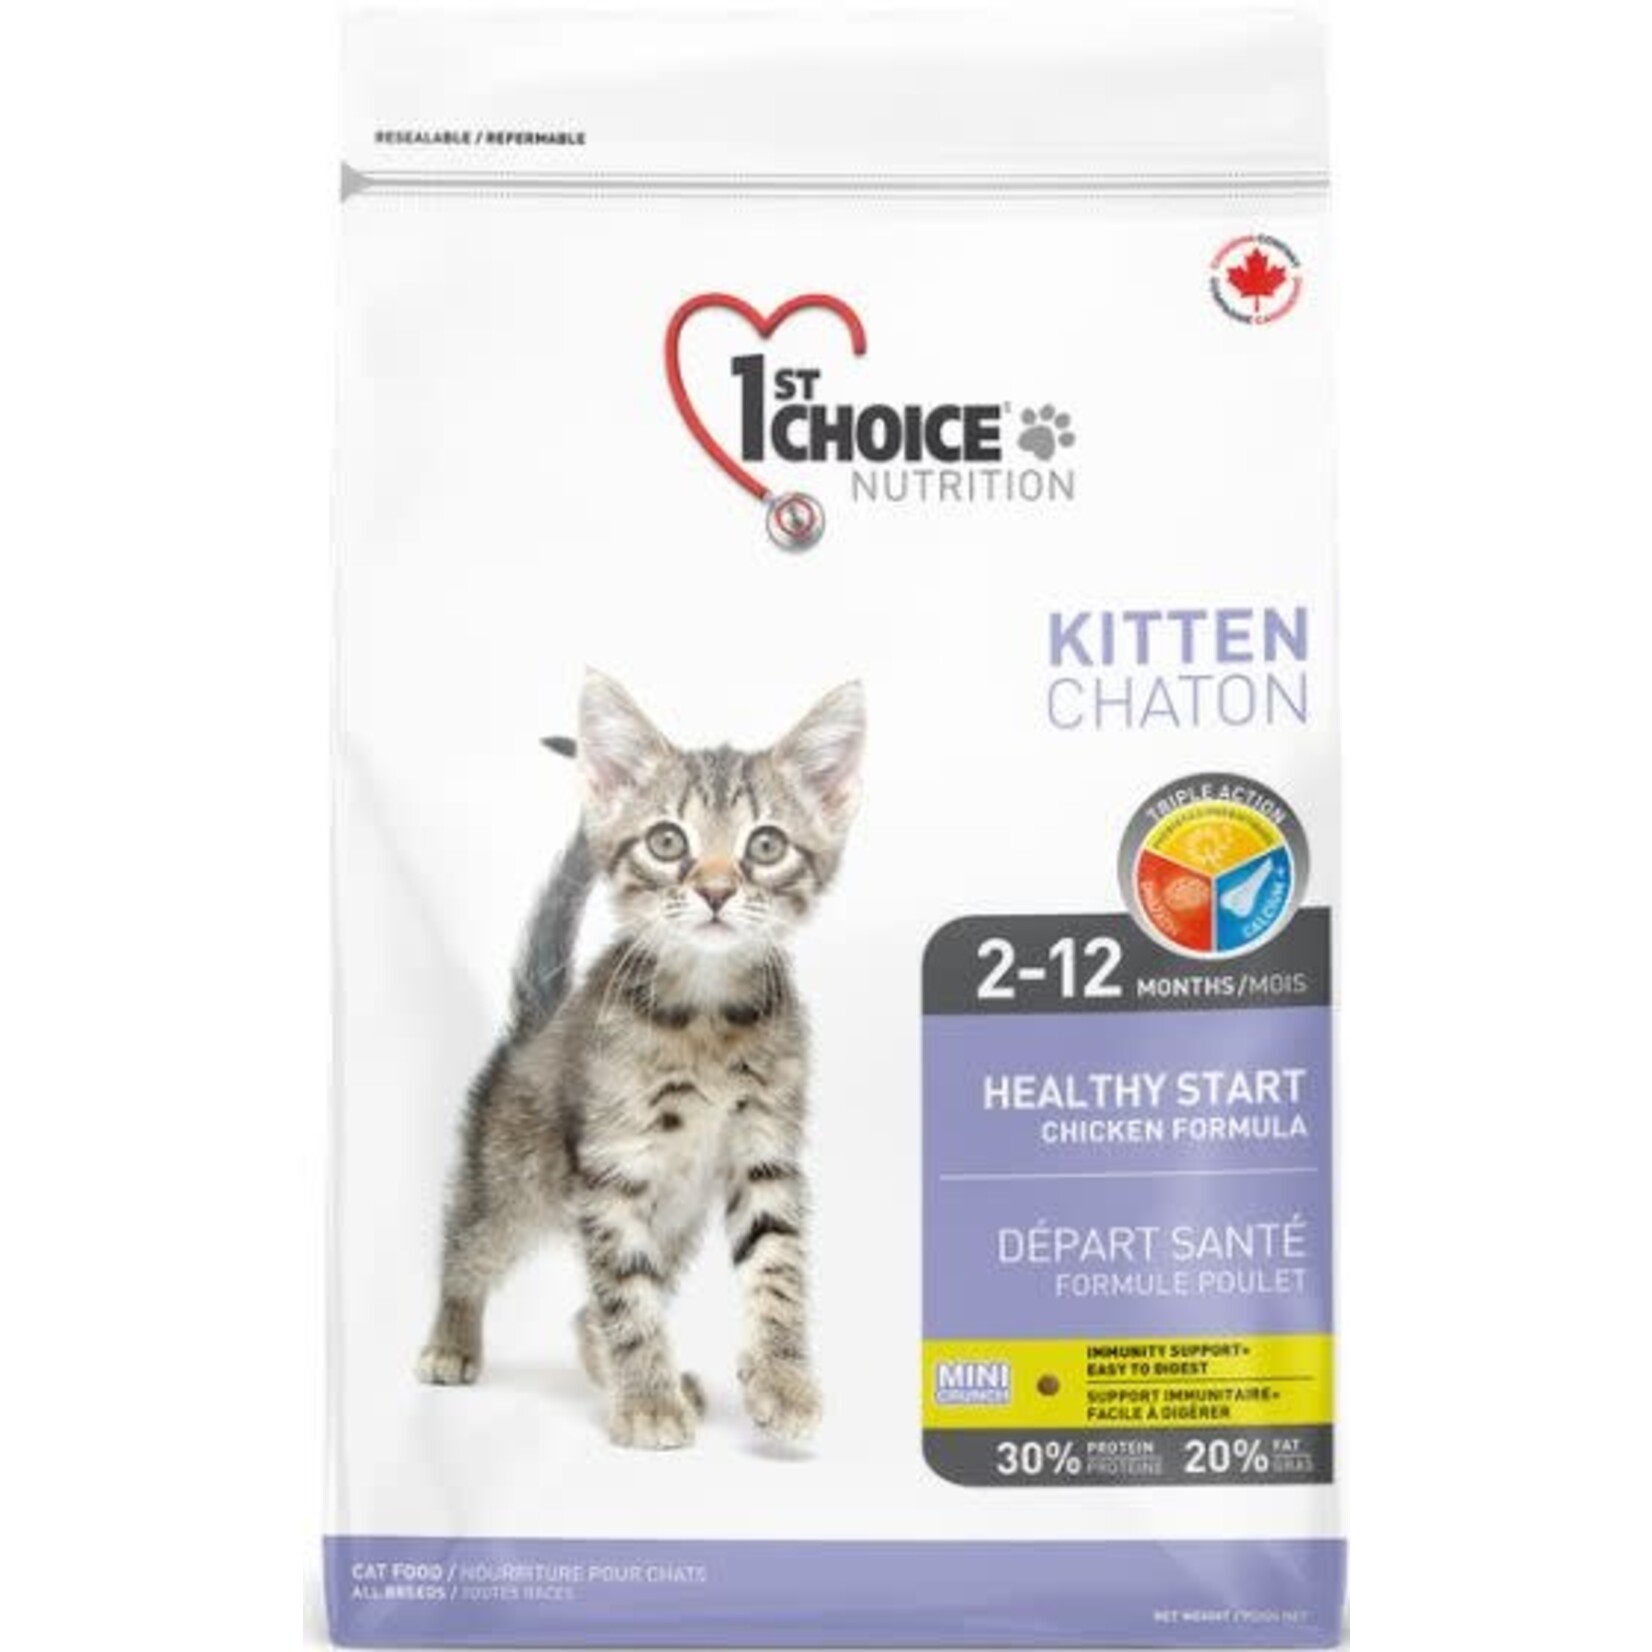 1st Choice 1st Choice Healthy Start Dry Kitten Food